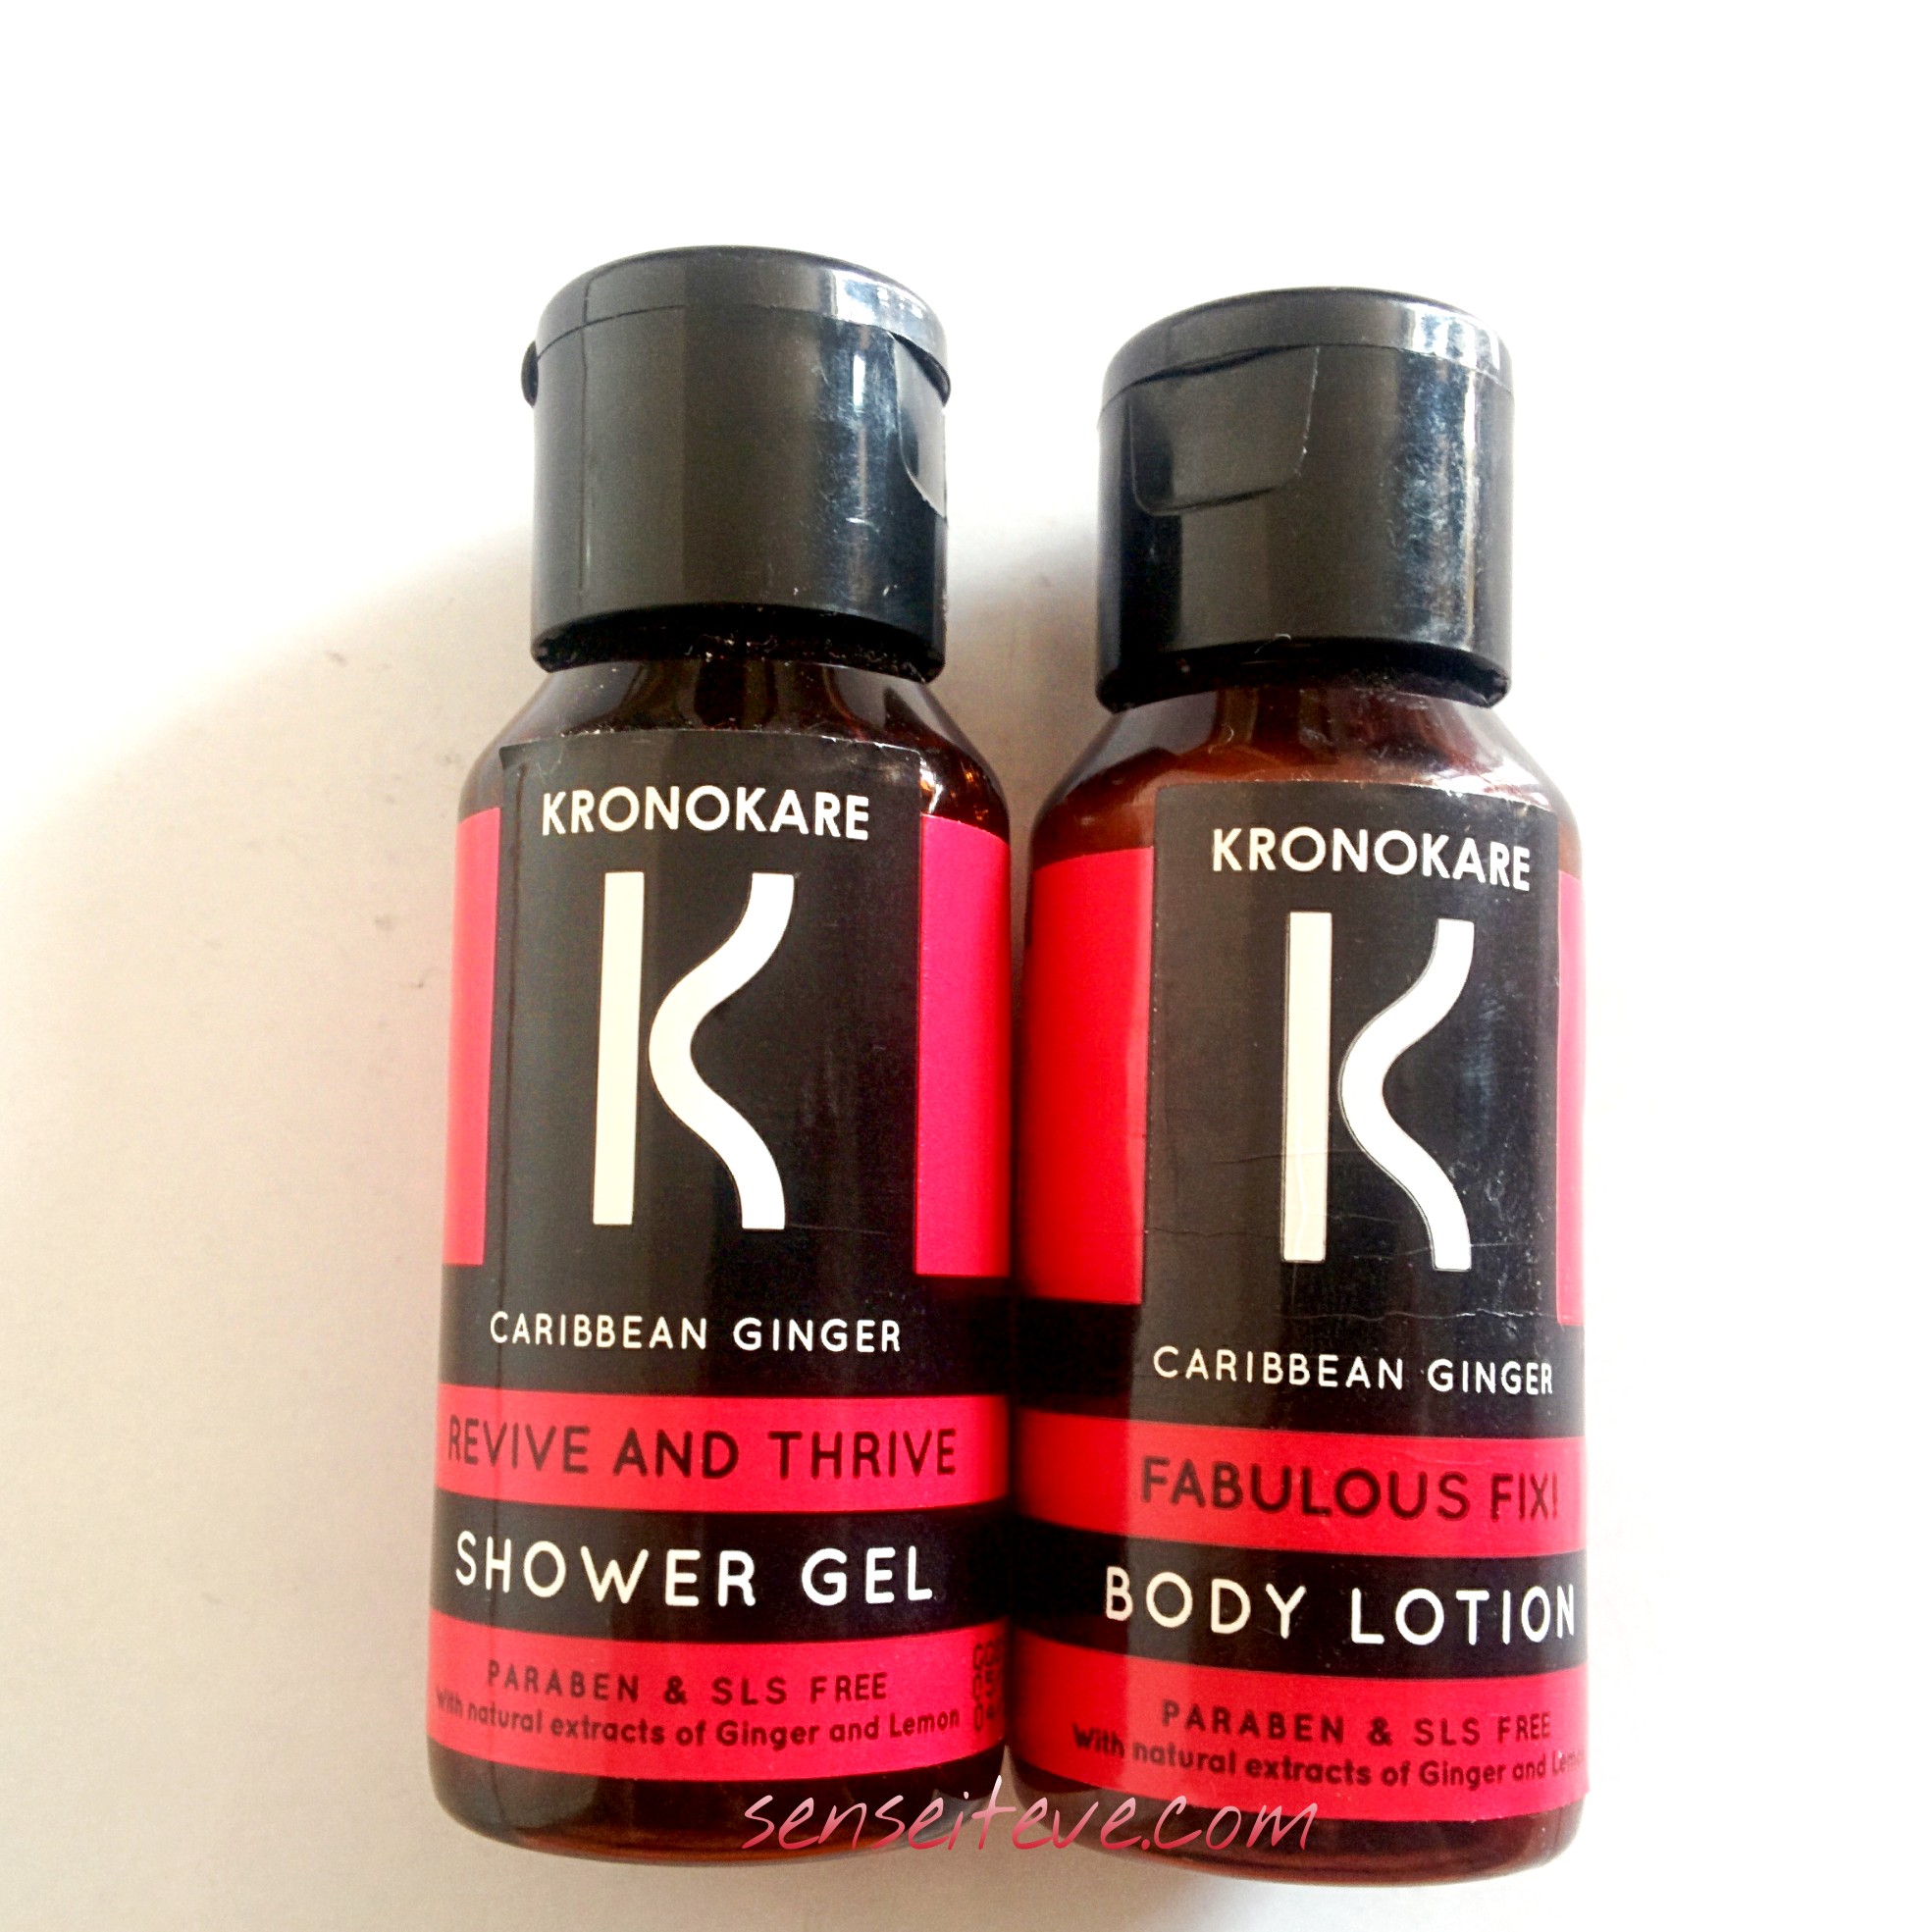 Kronokare-Caribbean-Ginger-Shower-gel-and-Body-lotion-Review